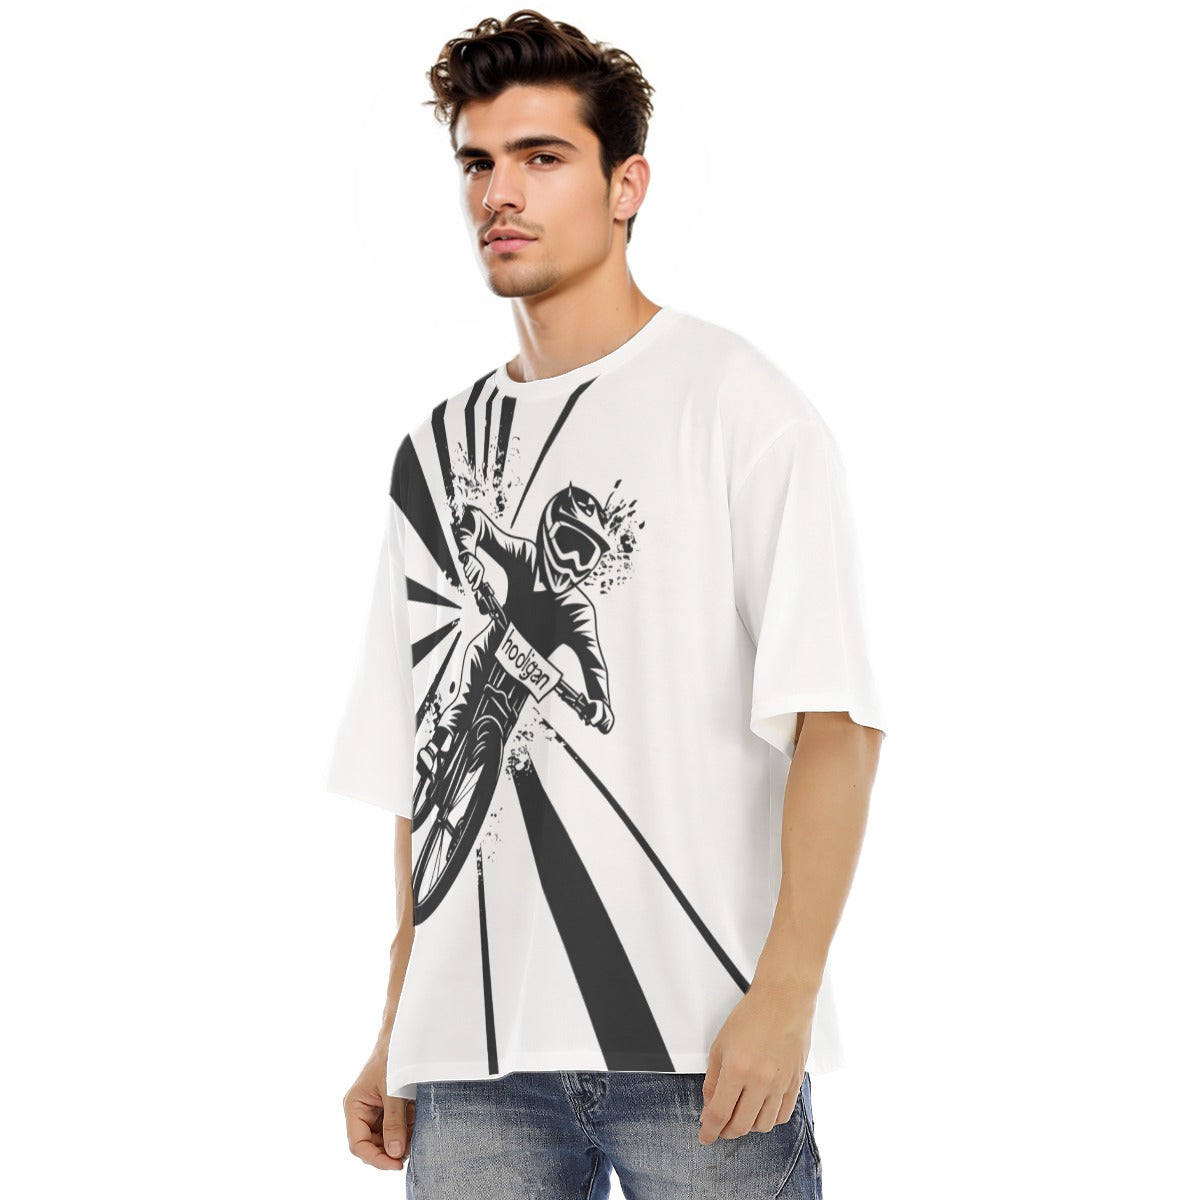 All-Over Print Men's Raglan Short Sleeve T-Shirt|180GMS COTTON